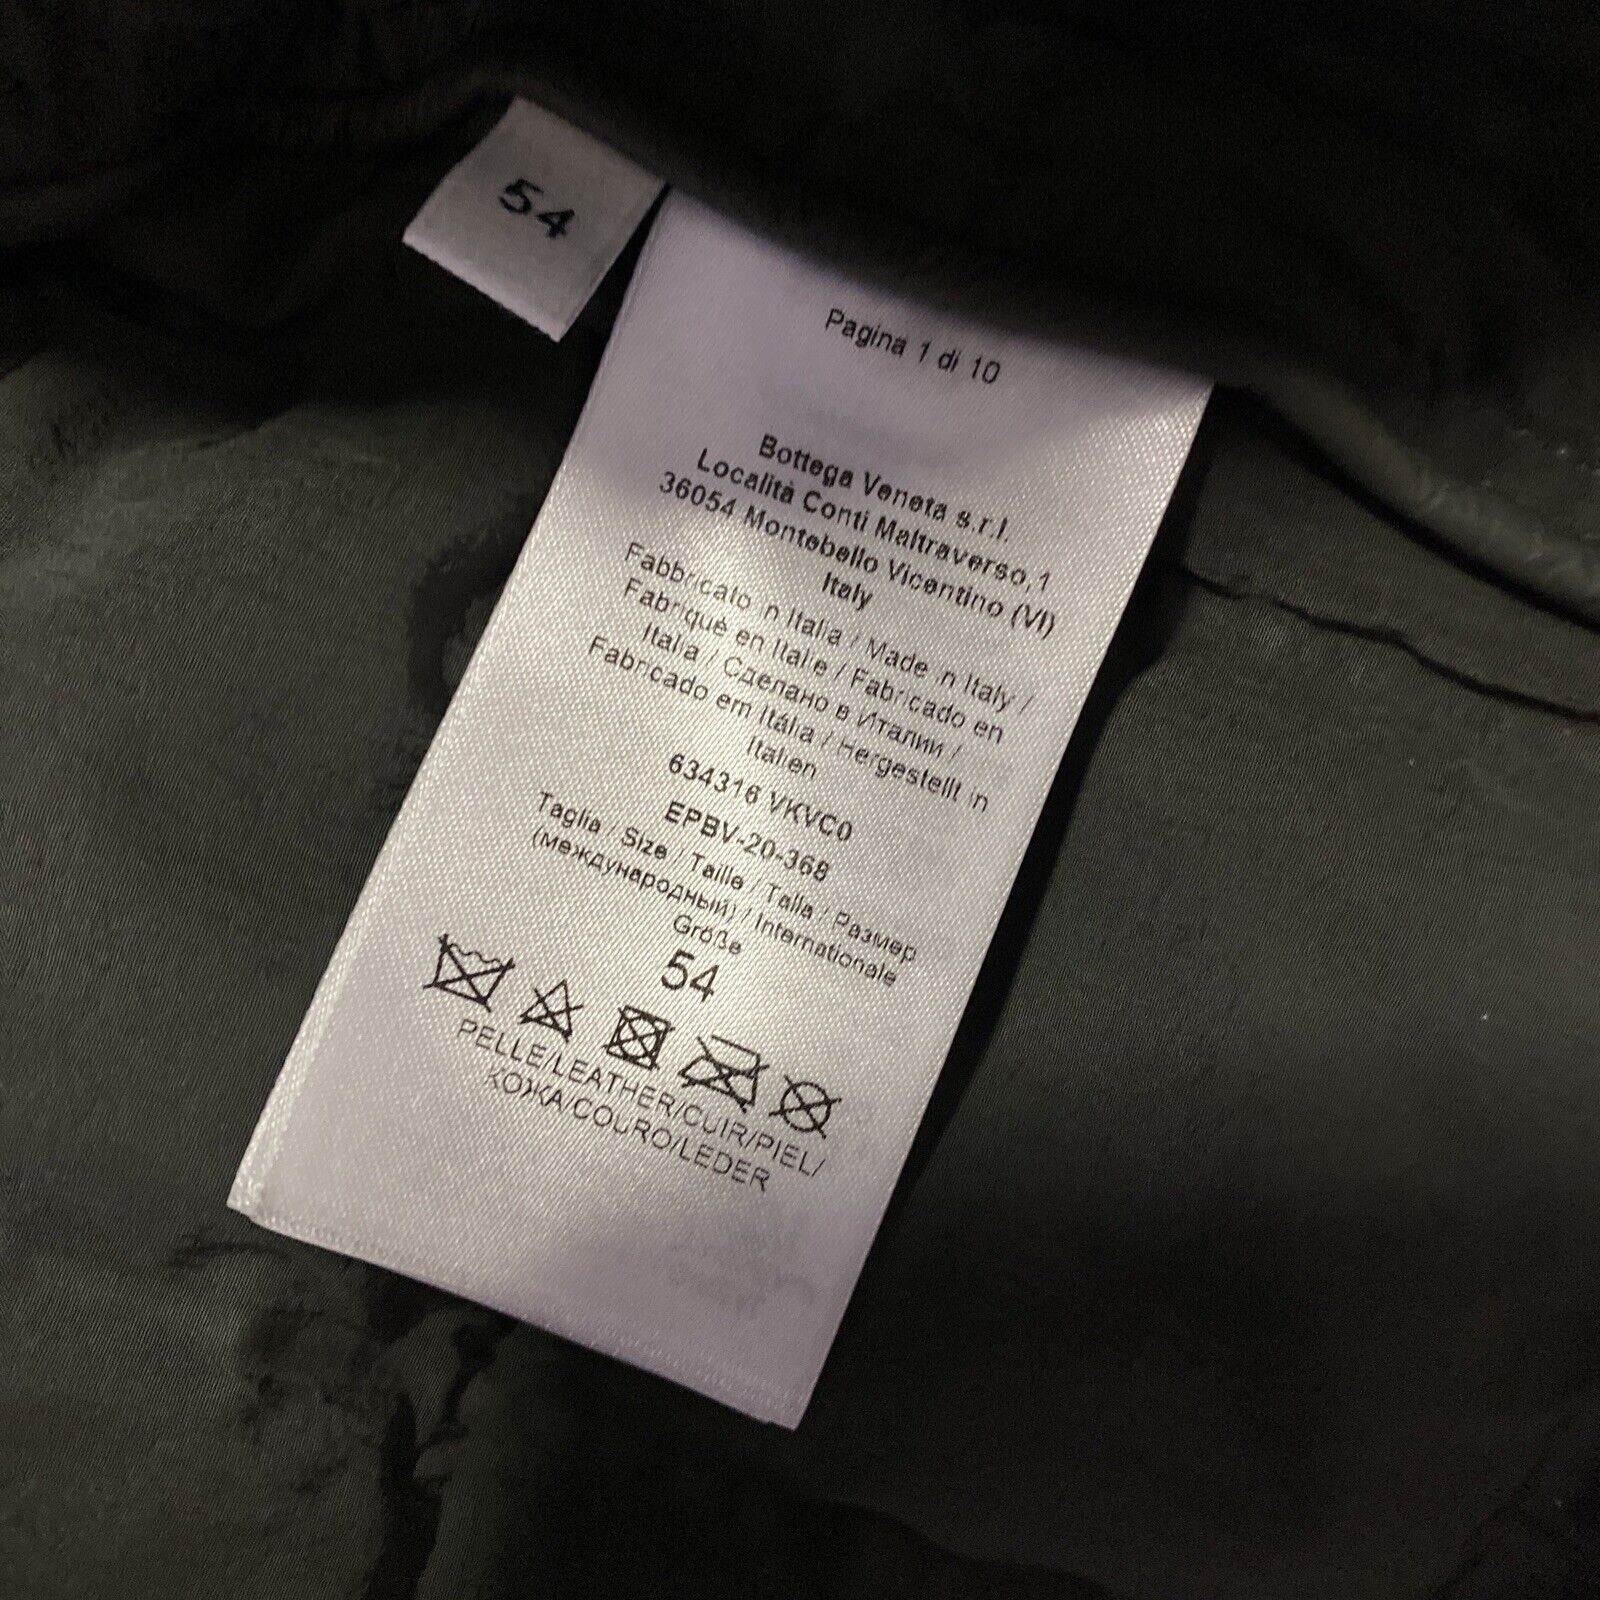 Новая мужская легкая кожаная куртка оверсайз Bottega Veneta за 6700 долларов 44 США/54 ЕС